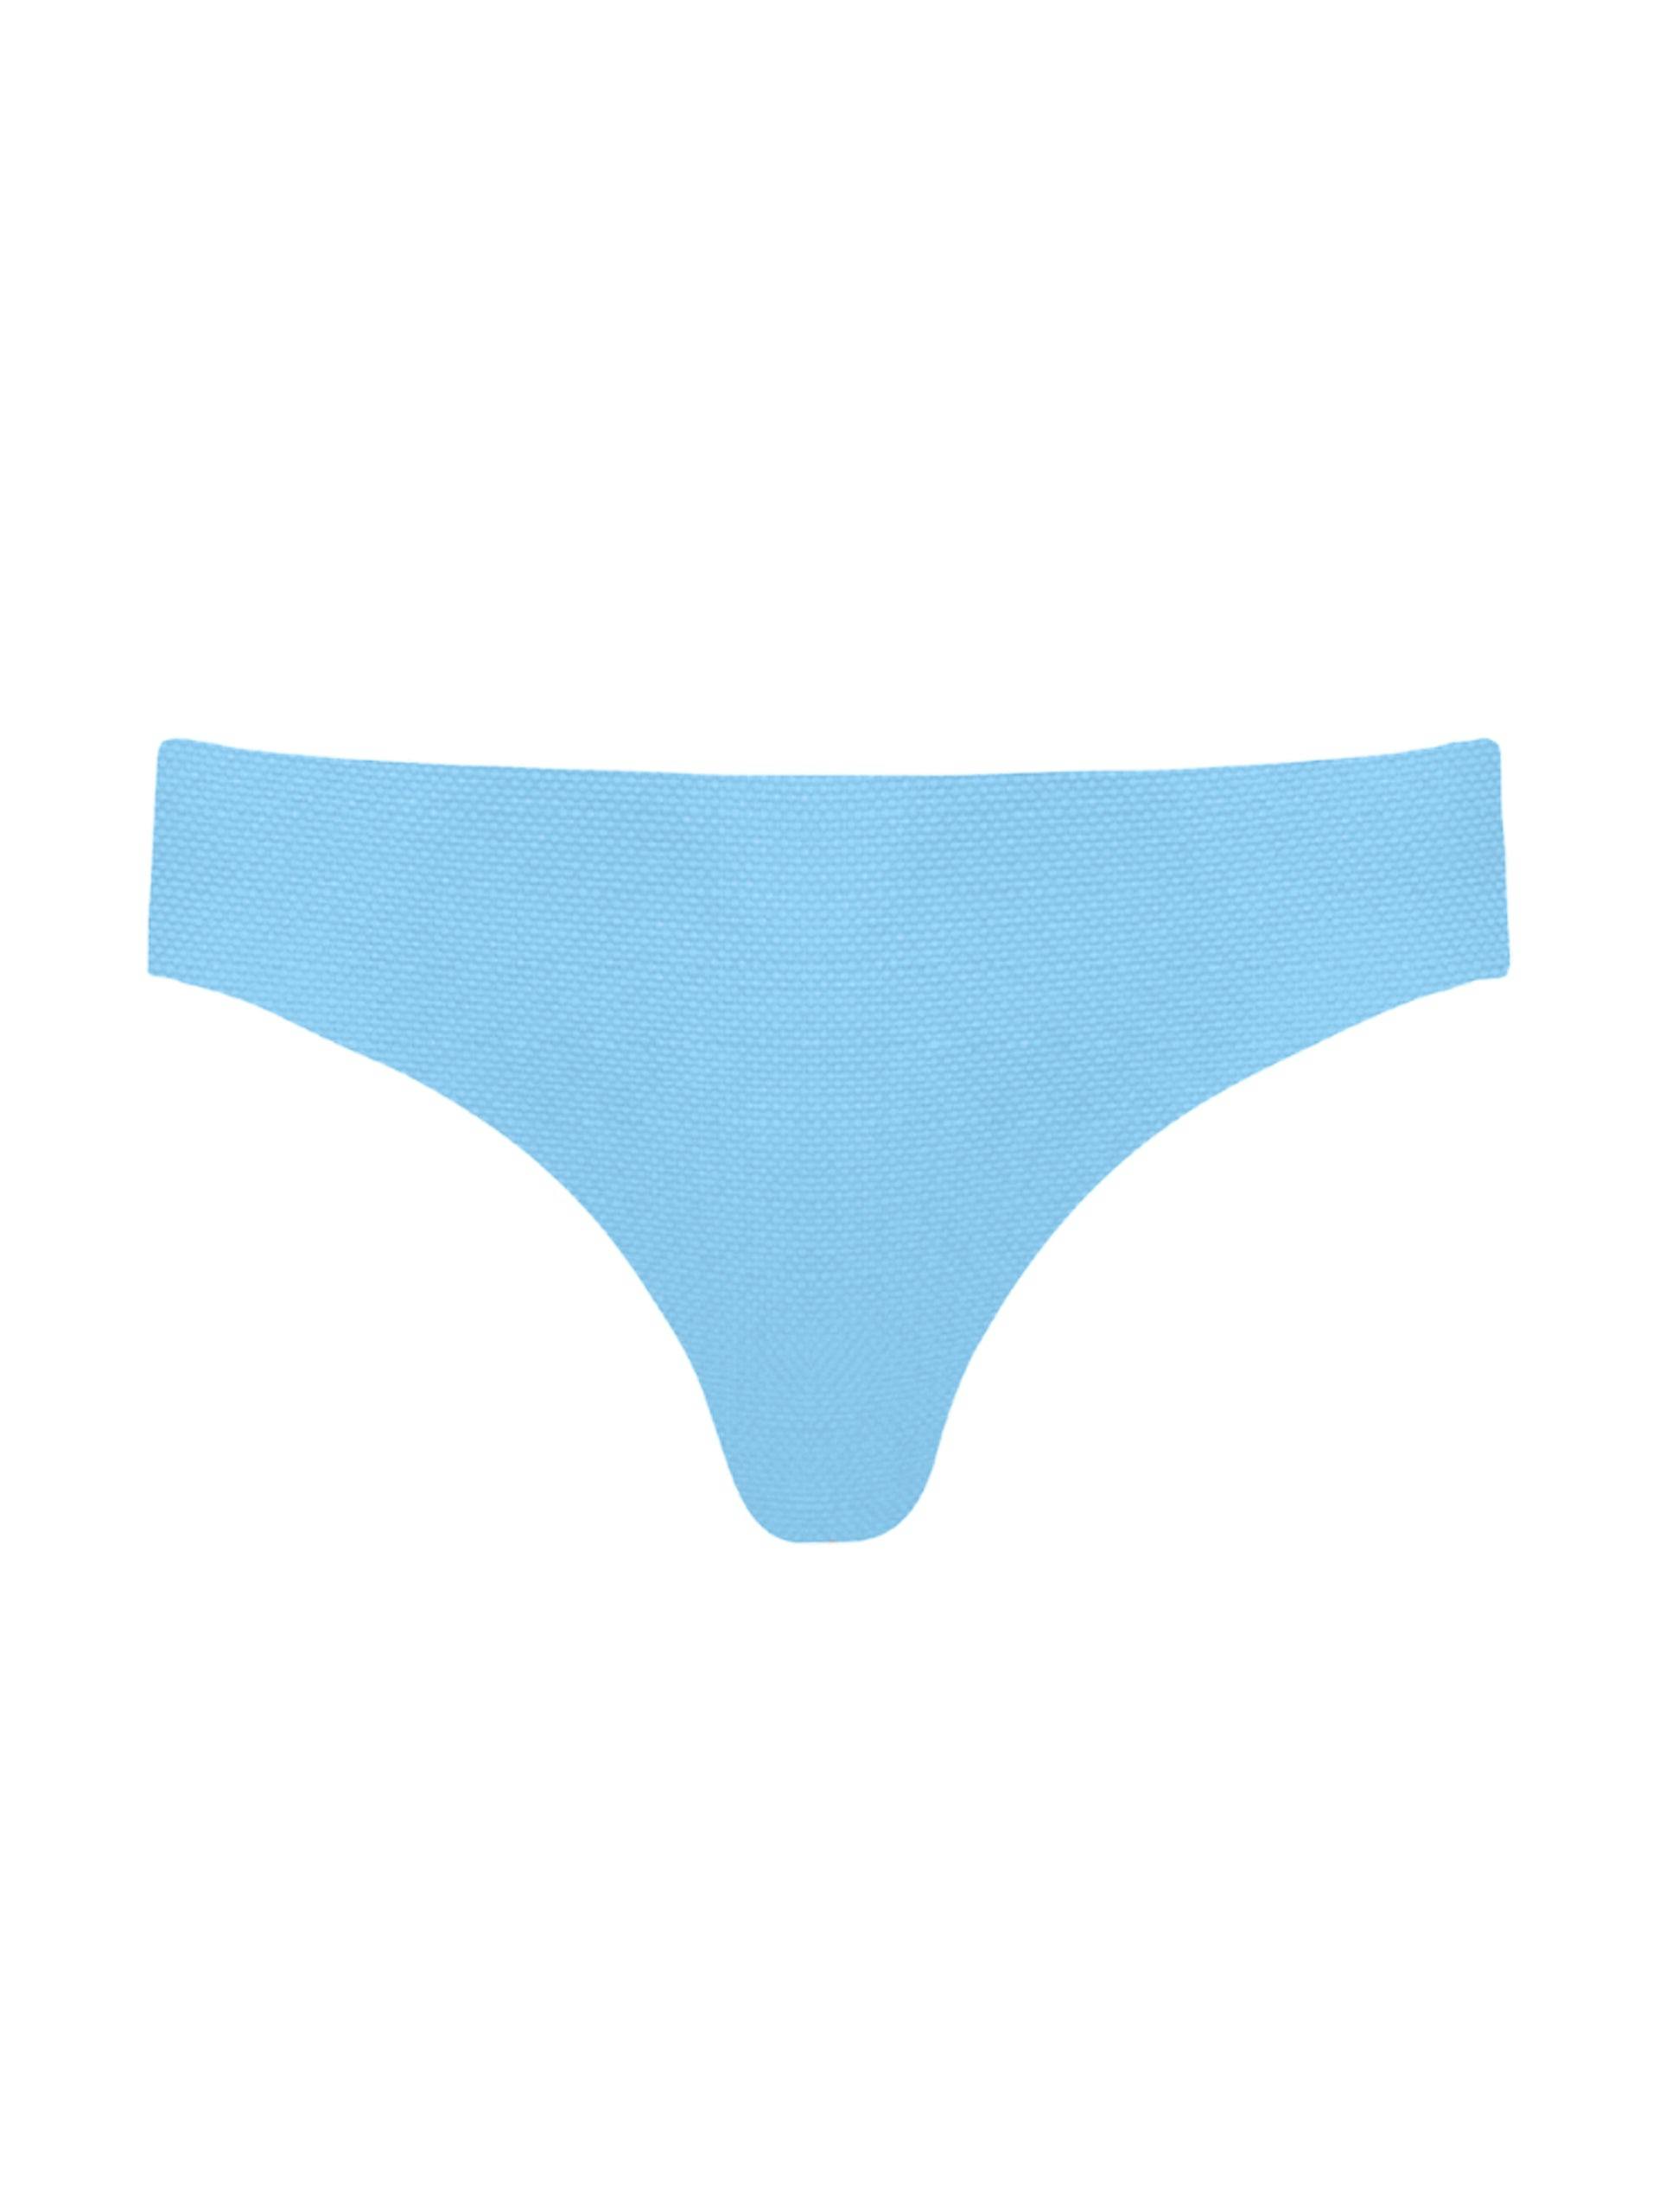 Cool blue Elle bikini bottom